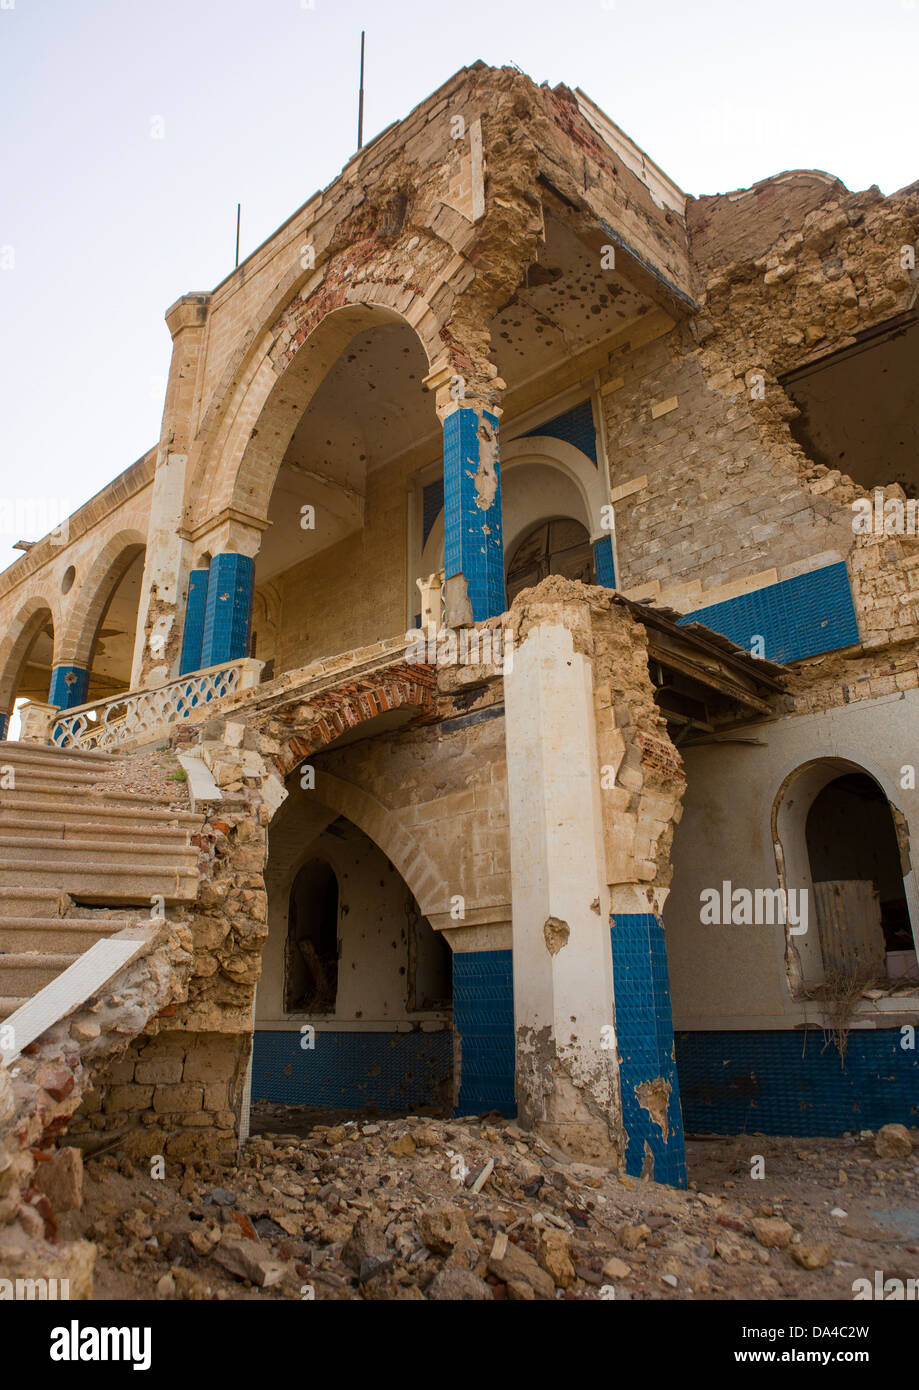 The Old Palace Of Haile Selassie, Massawa, Eritrea Stock Photo